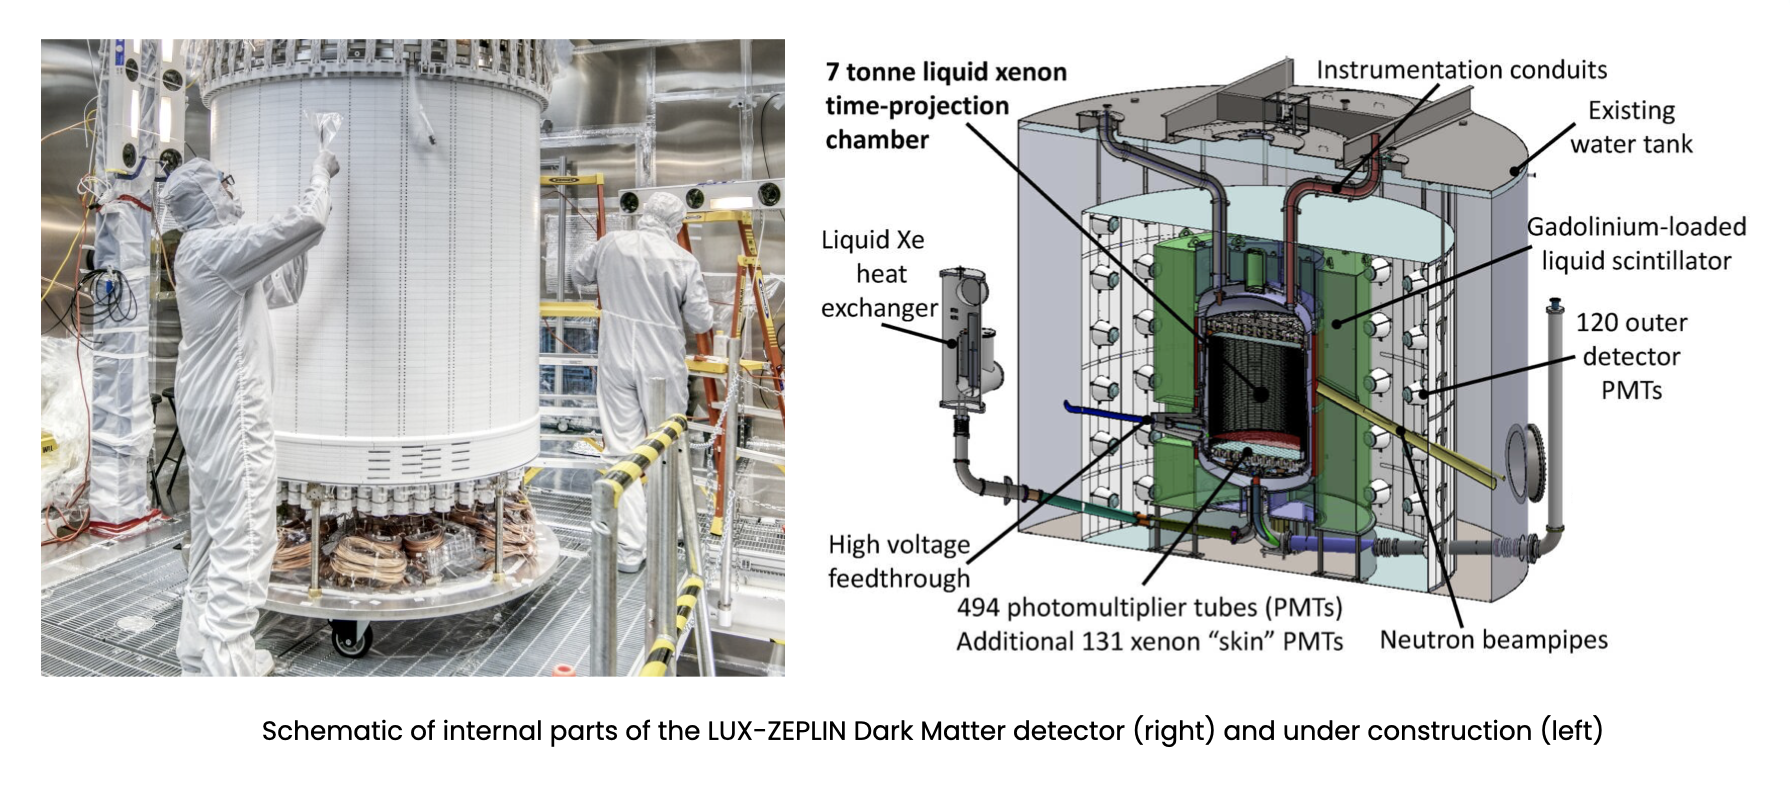 Left: LUX-ZEPLIN Dark Matter detector under construction. Right: Schematic of internal structure of the detector.